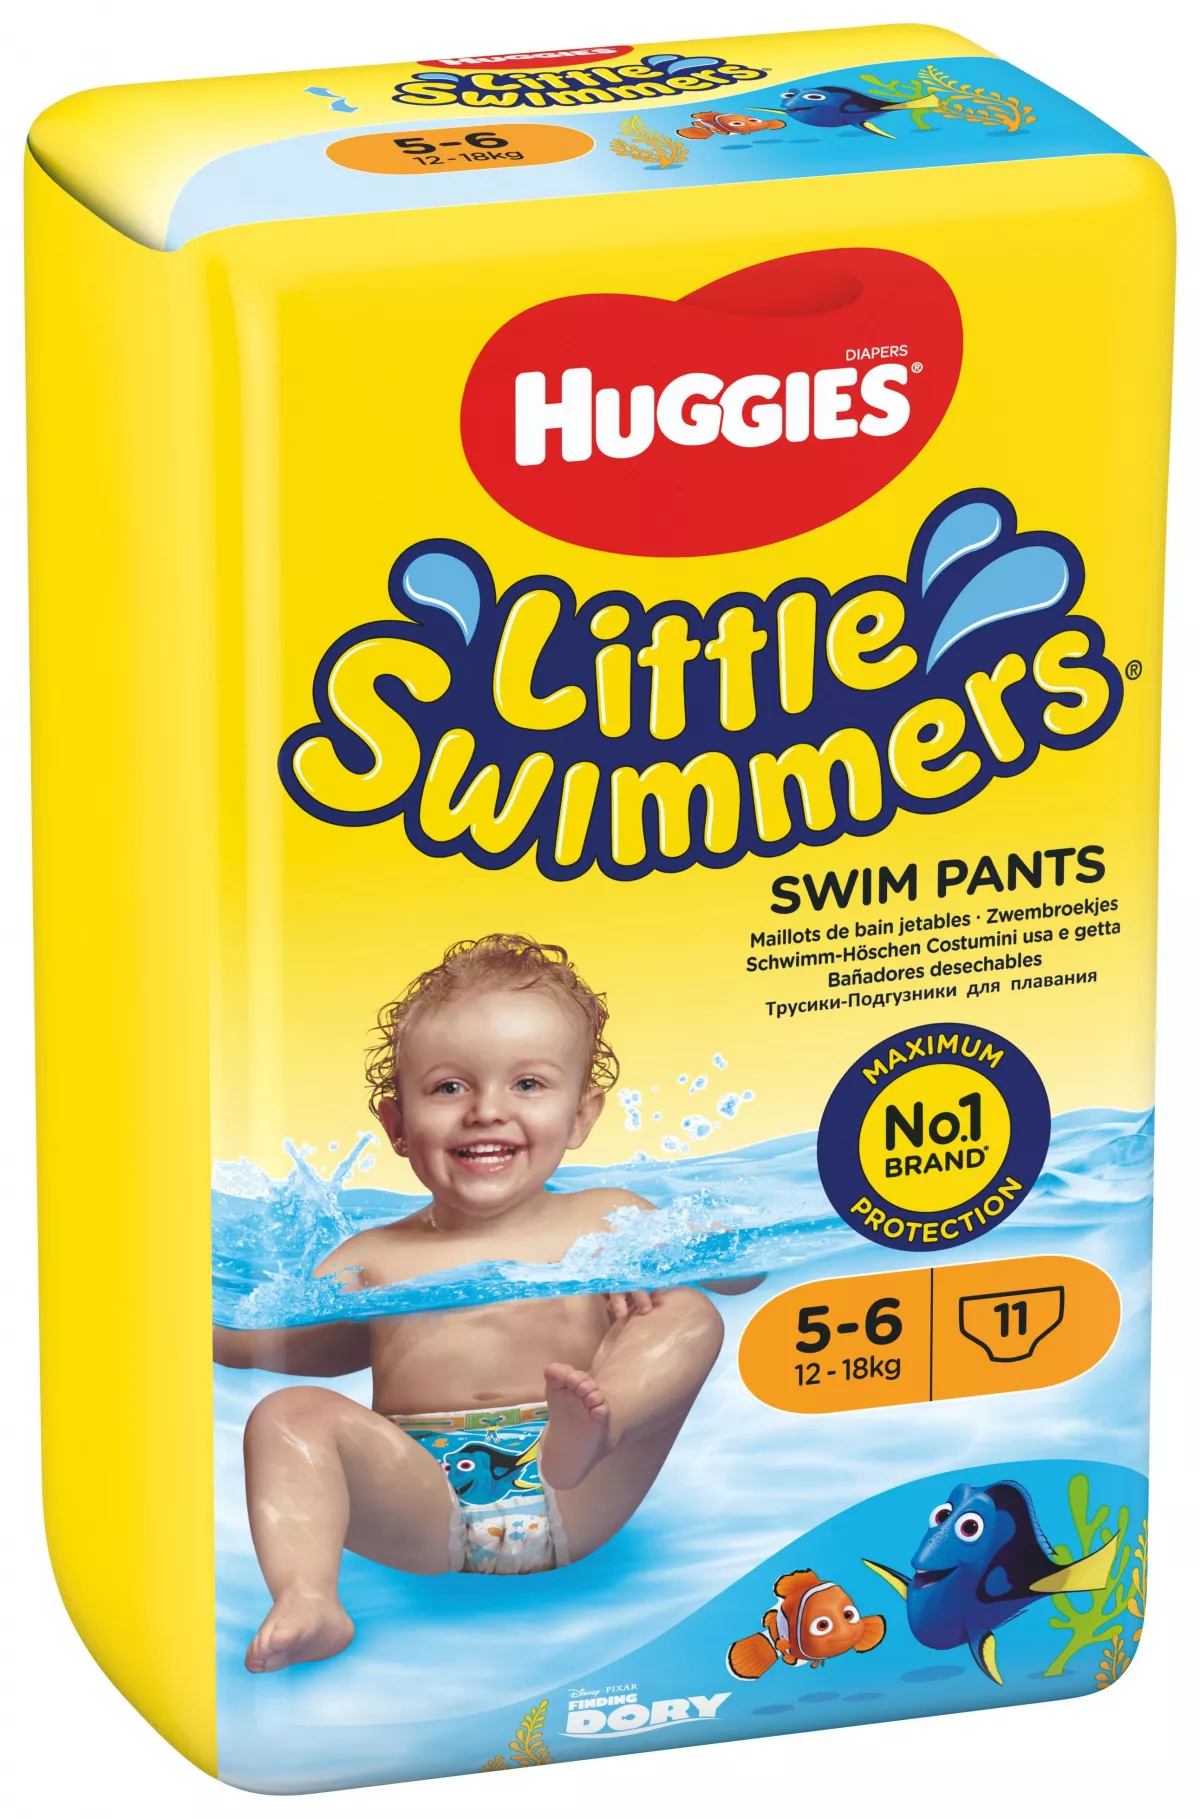 Scutece chilotel impermeabile pentru inot Huggies Little Swimmers, marimea  5-6, 12-18kg, 11buc, [],drogheriemb.ro